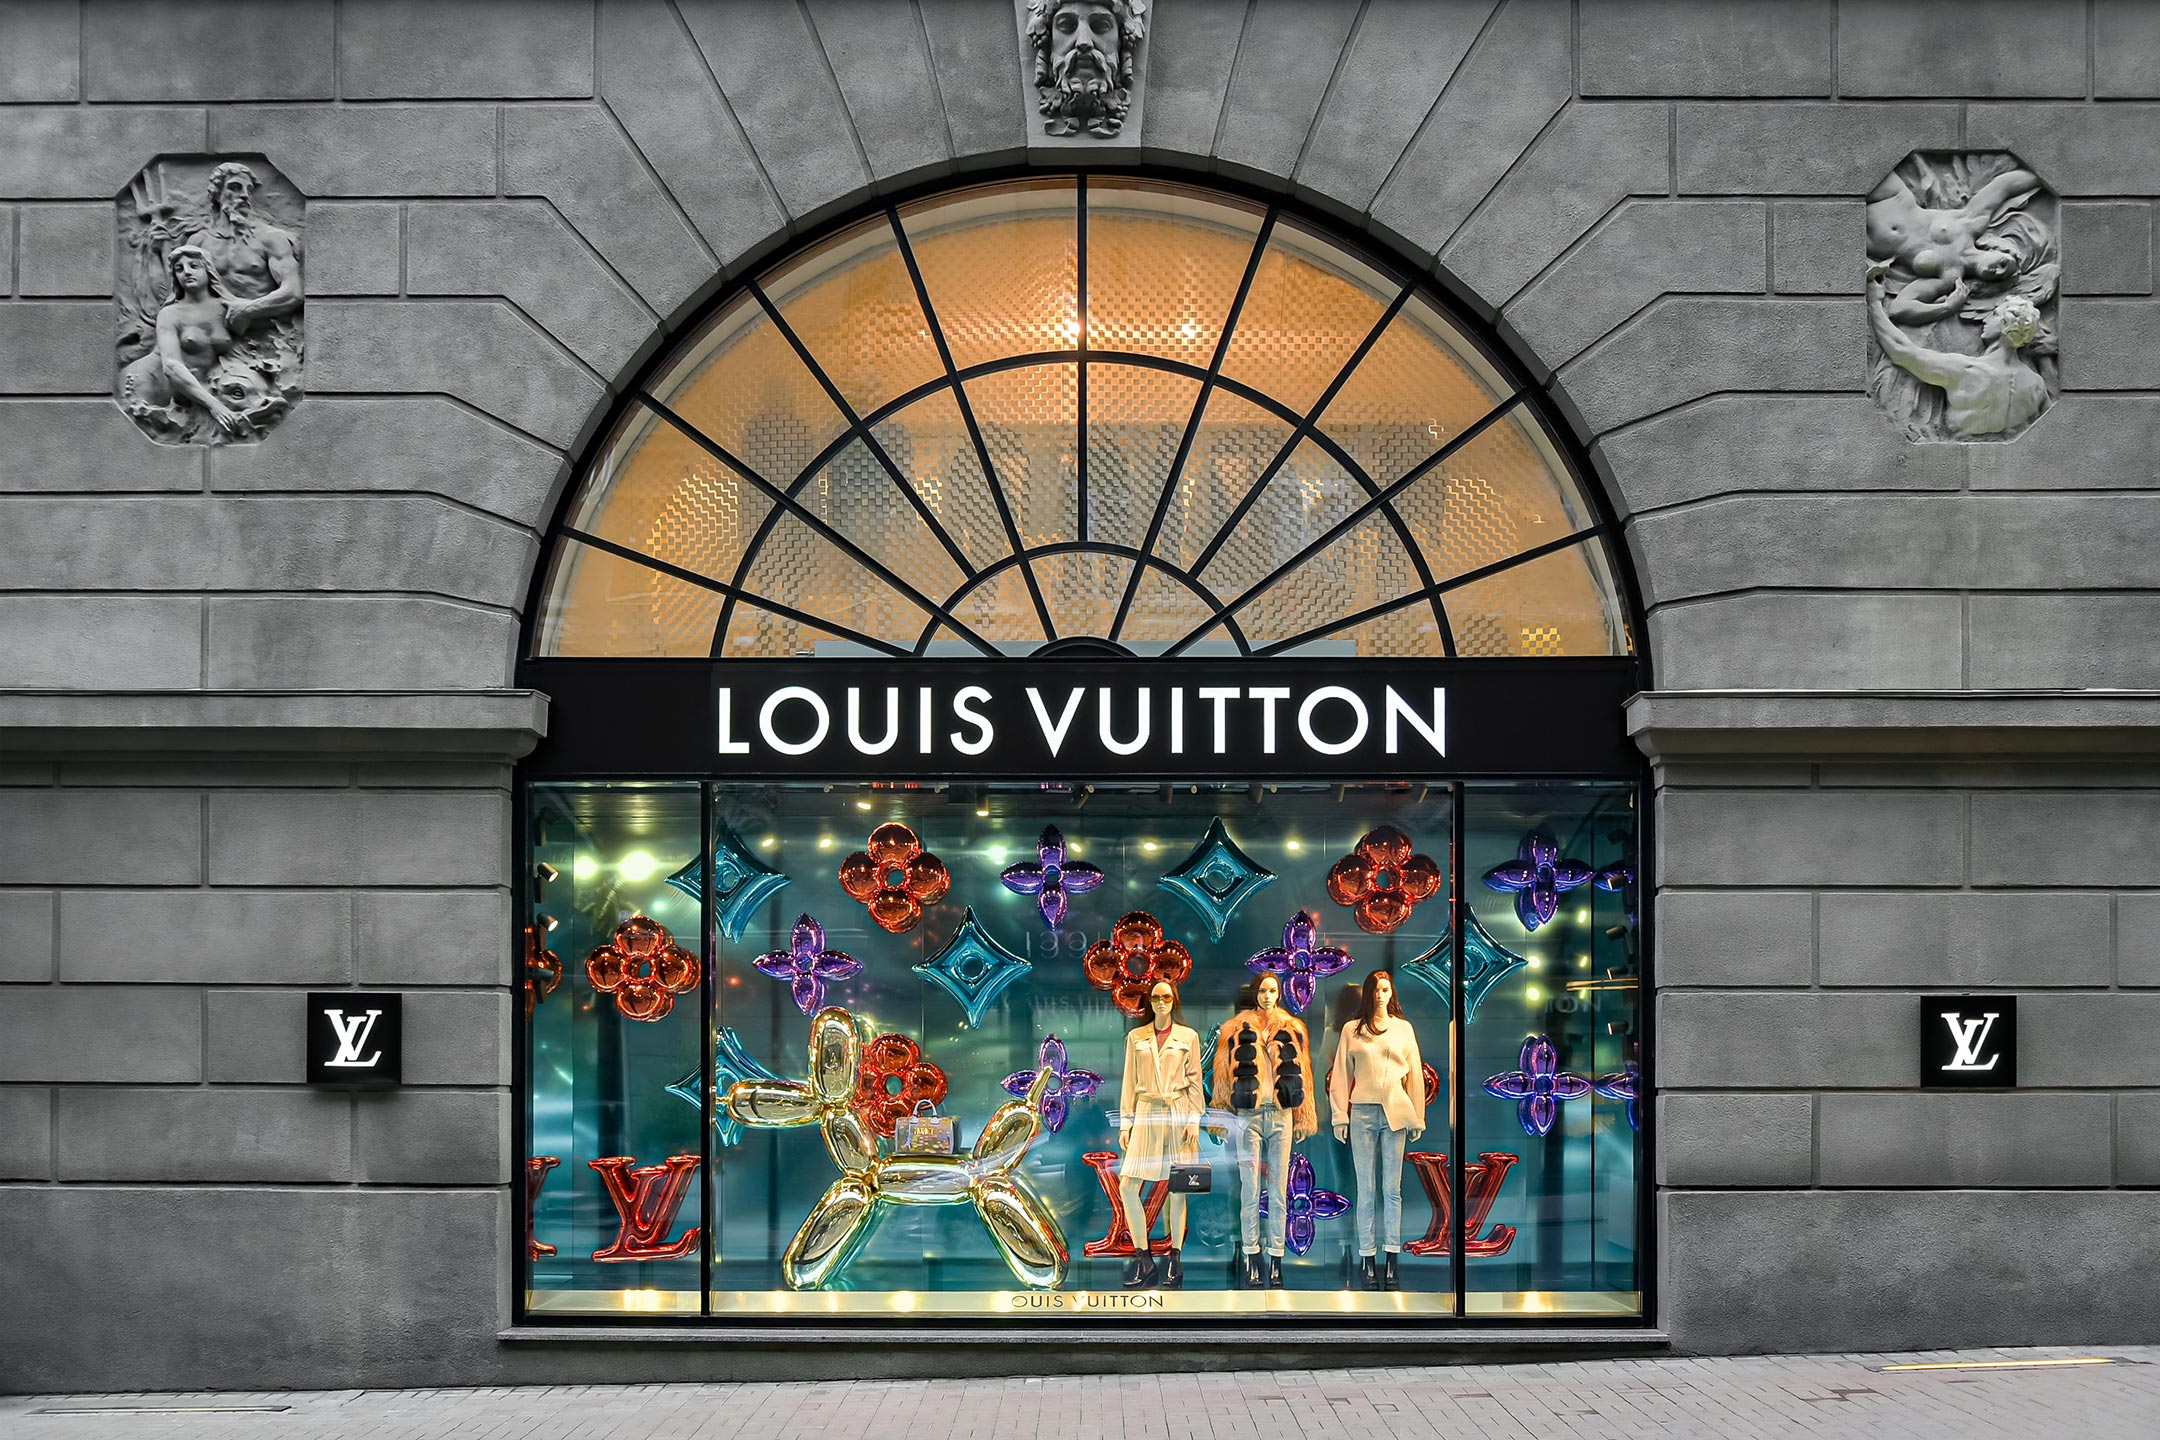 Louis Vuitton / Corker Marshall / architecture urban